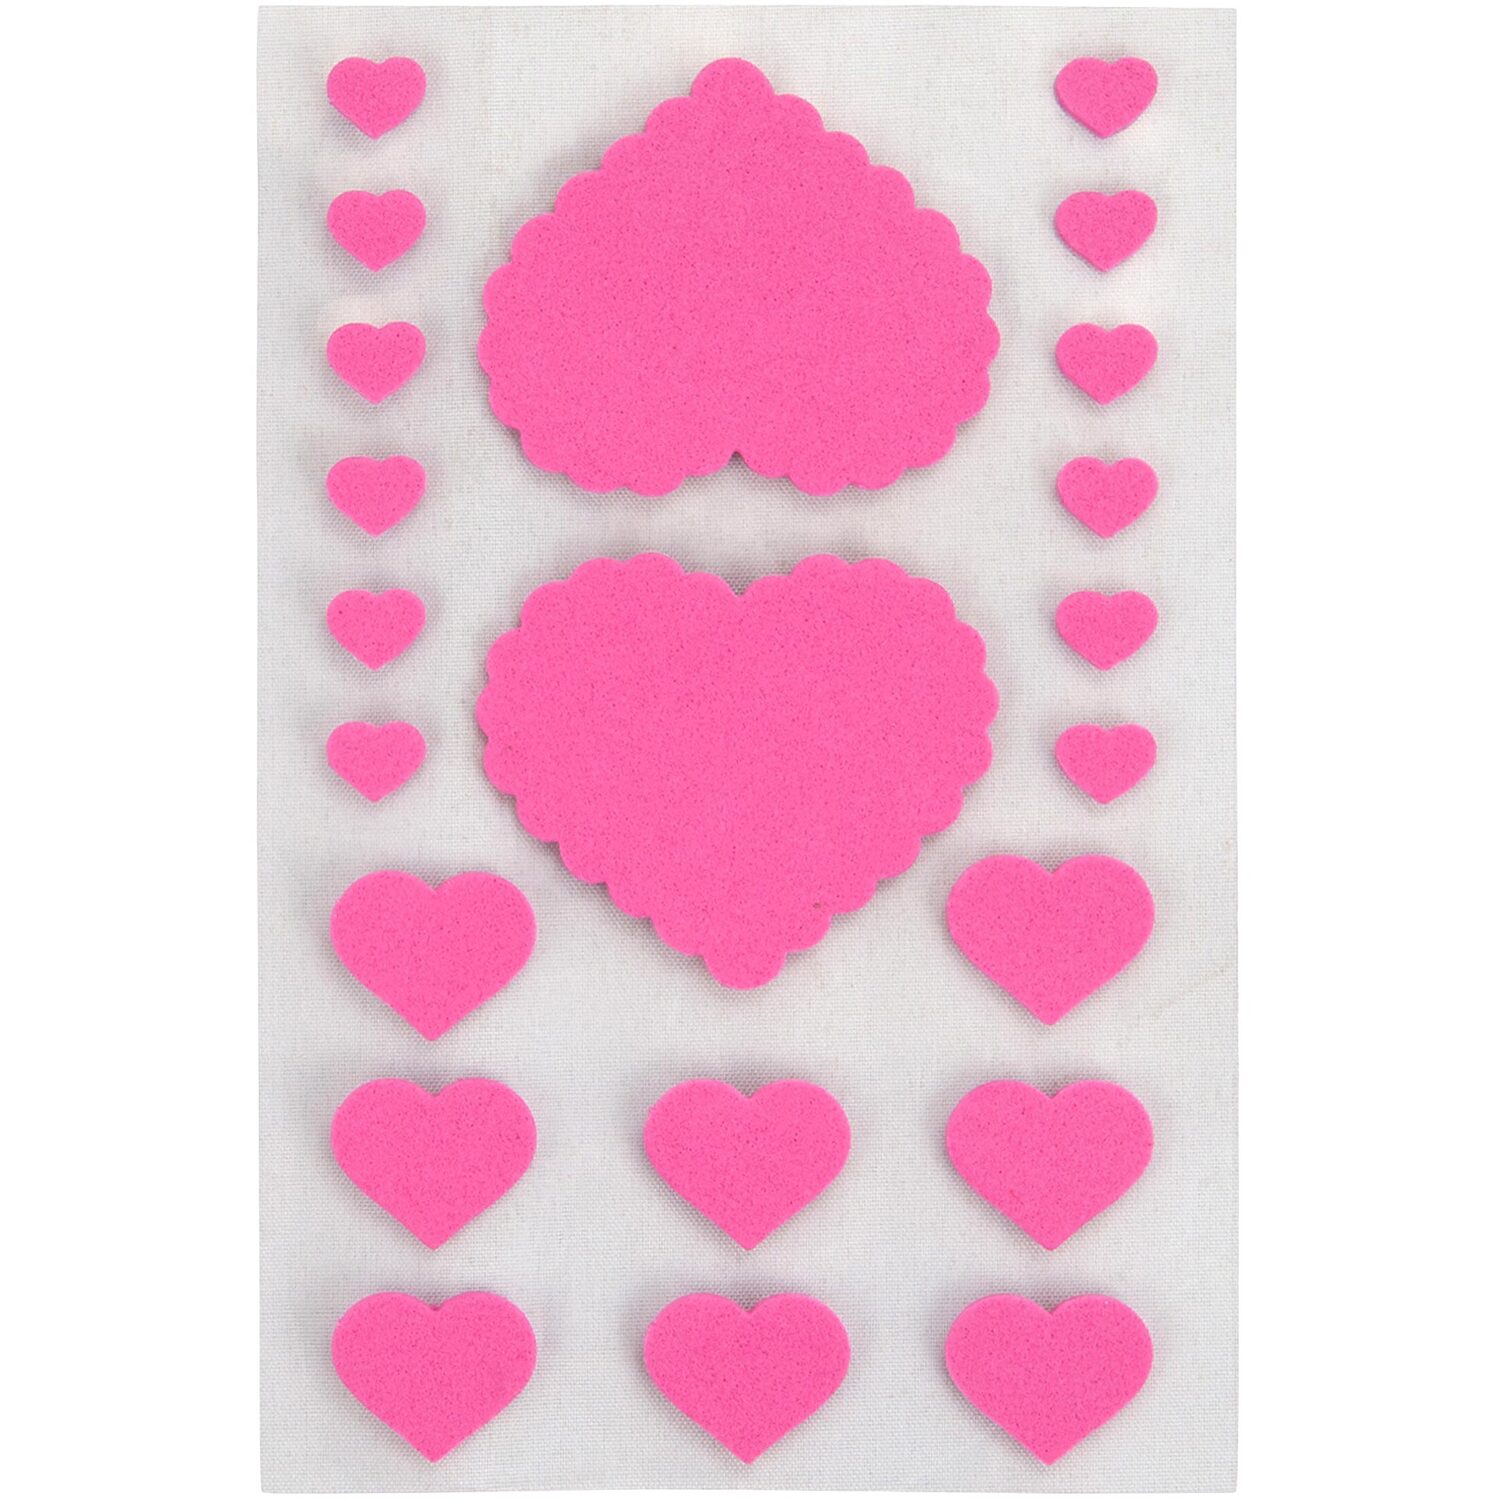 Heart Mix Match Cards Kit Image 4